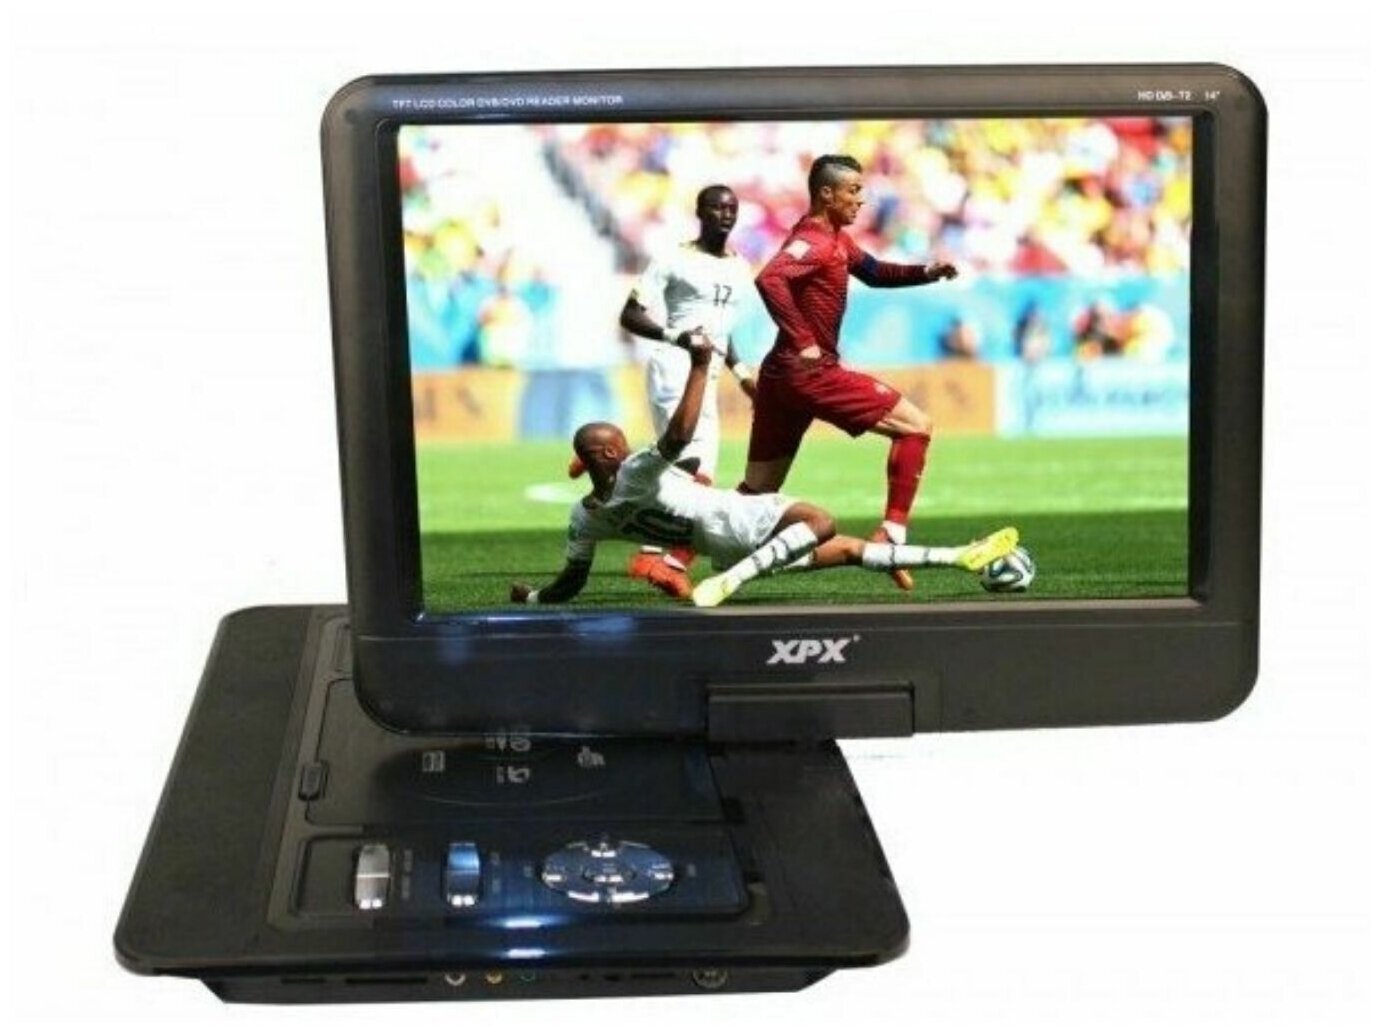 Портативный телевизор Xpx EA-1369L с DVD и DVB-T2 14" (1366X768)